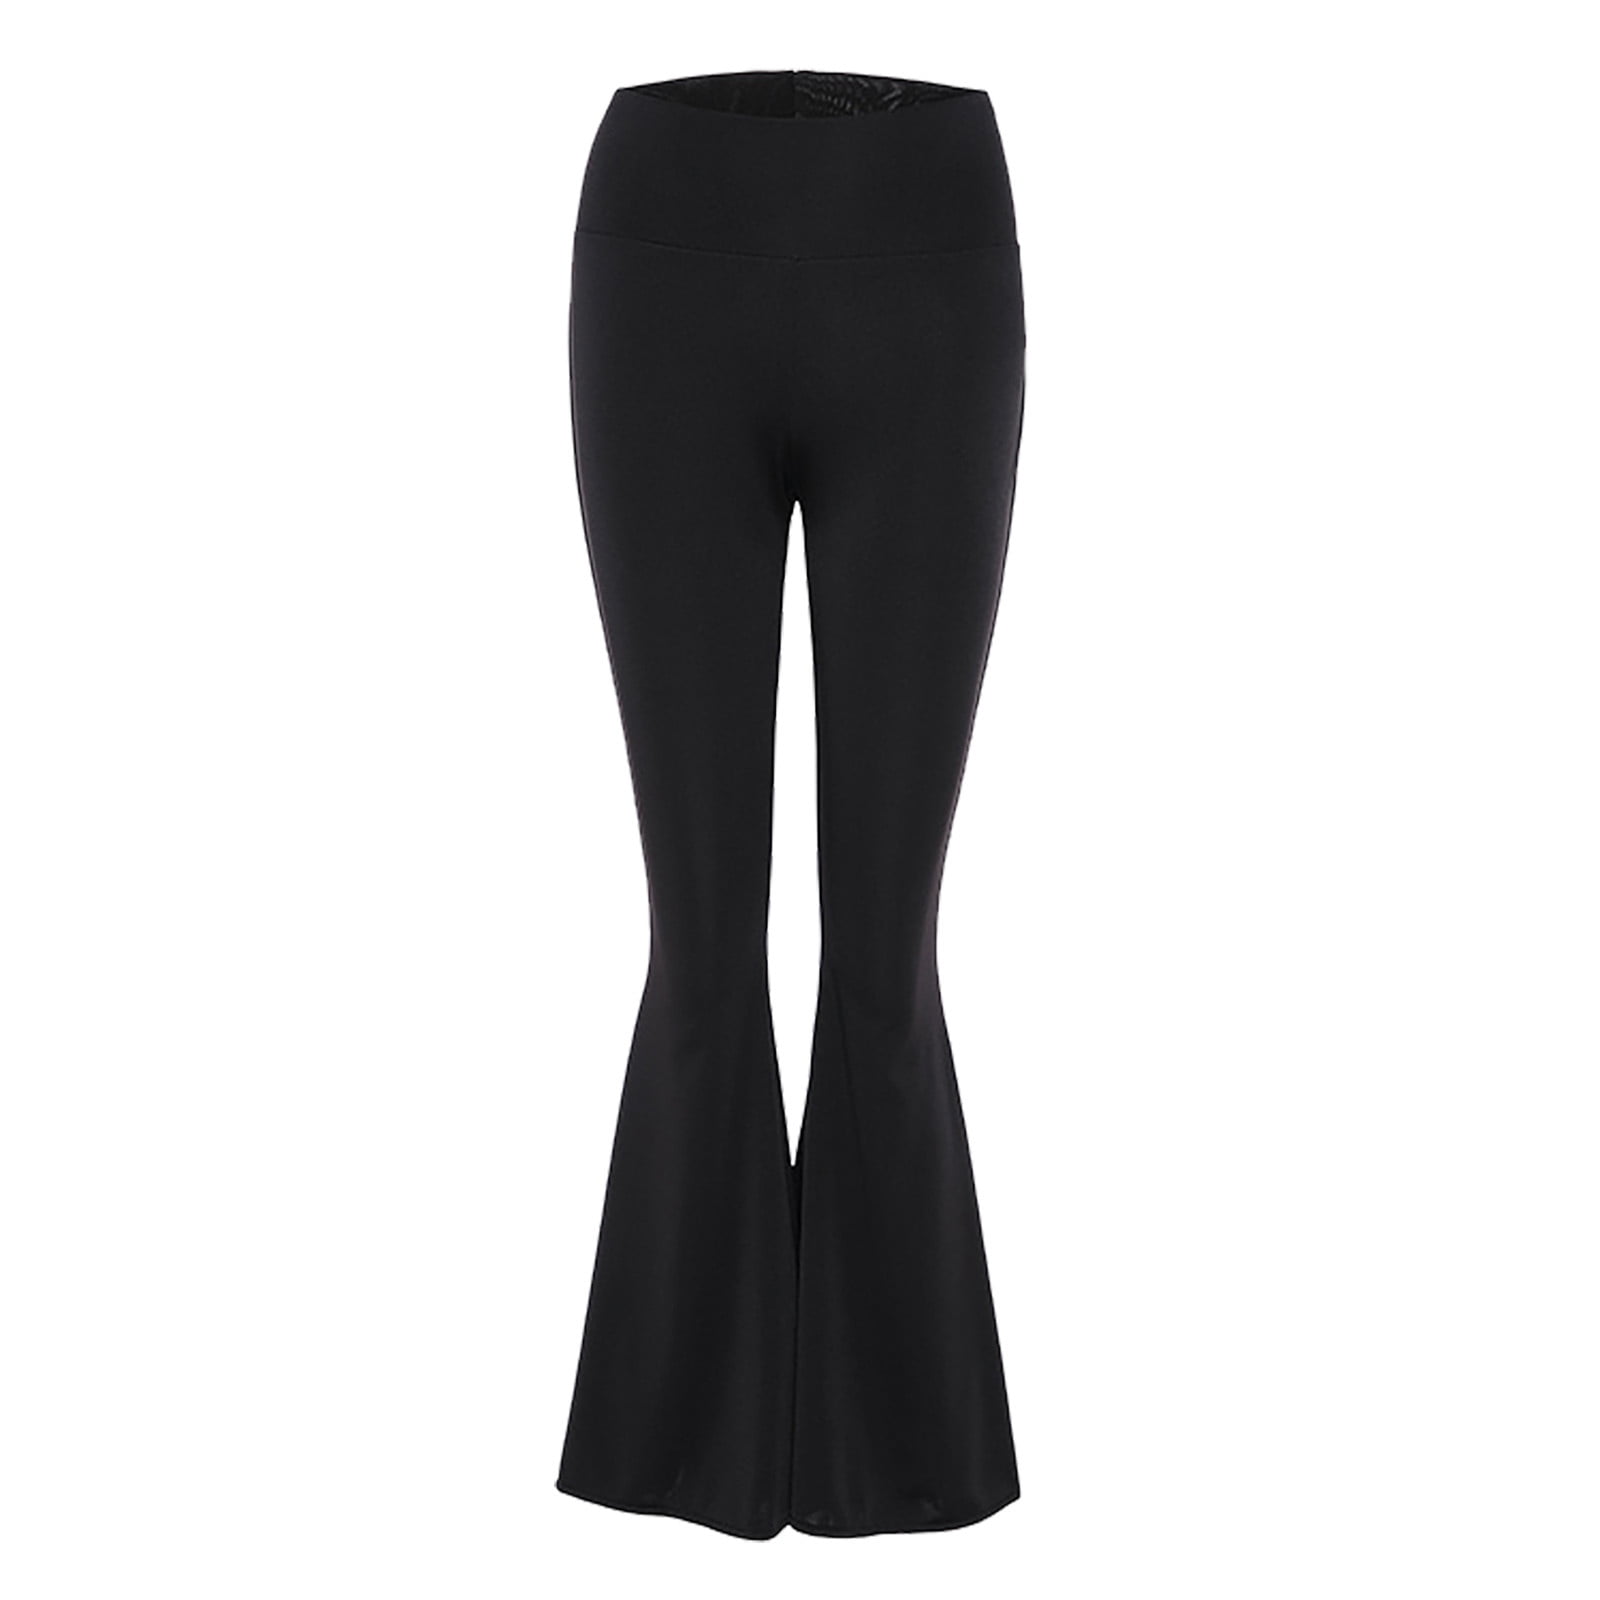 LEG-16 {So Carefree} Black Flared Yoga Pants PLUS SIZE XL 1X 2X 3X – Curvy  Boutique Plus Size Clothing